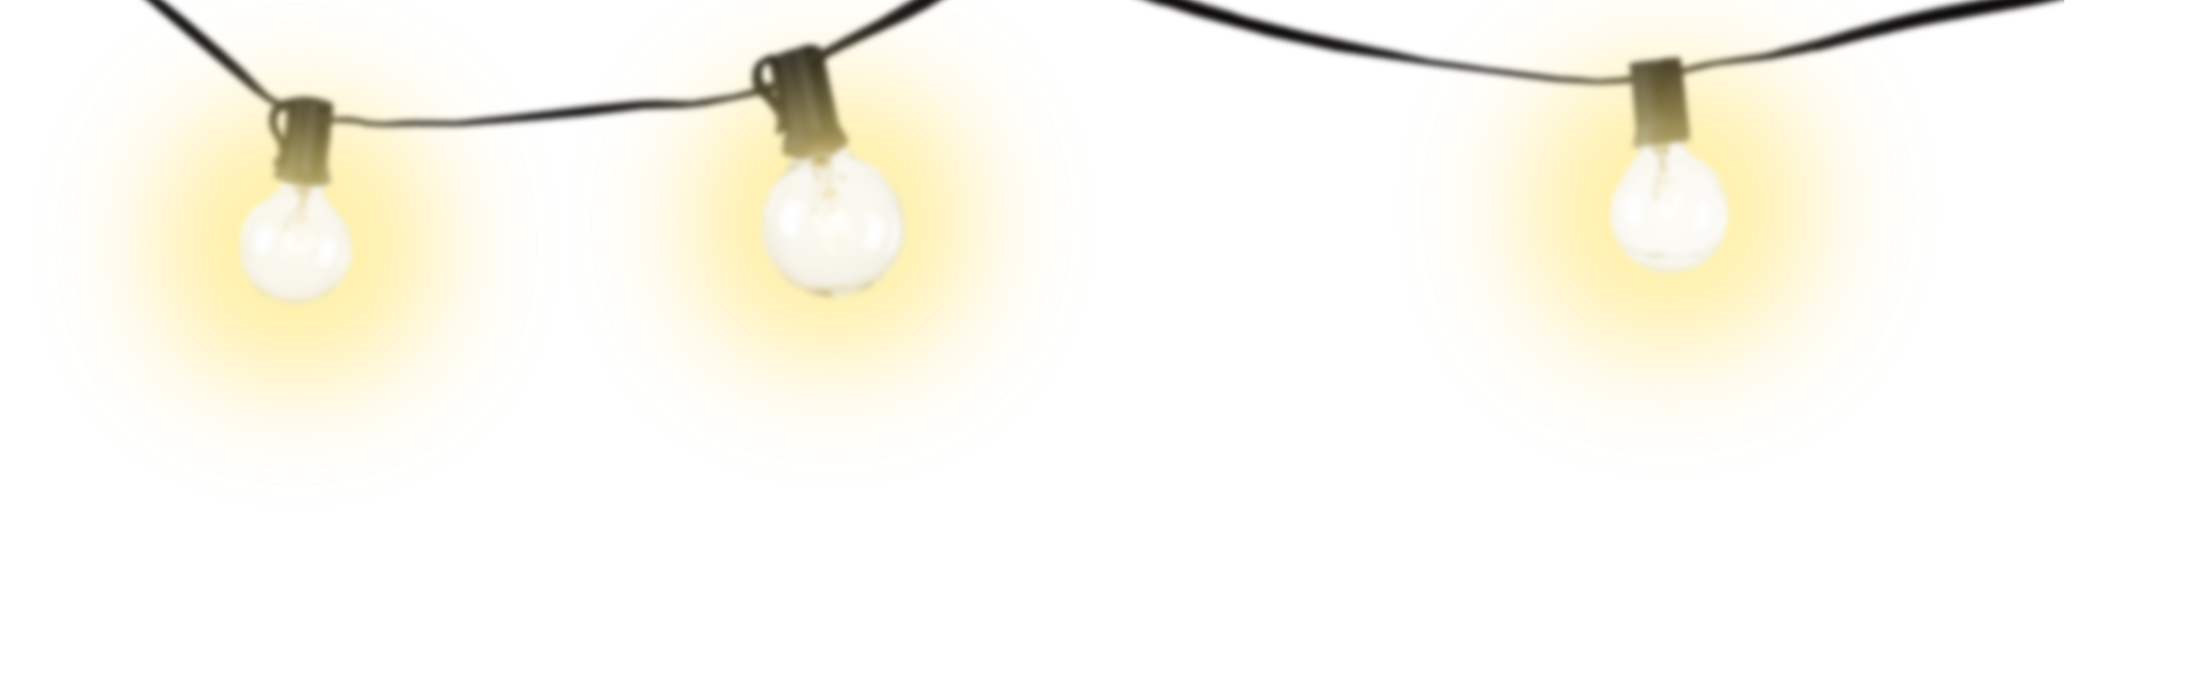 Electric Light Lamp Transparent Background